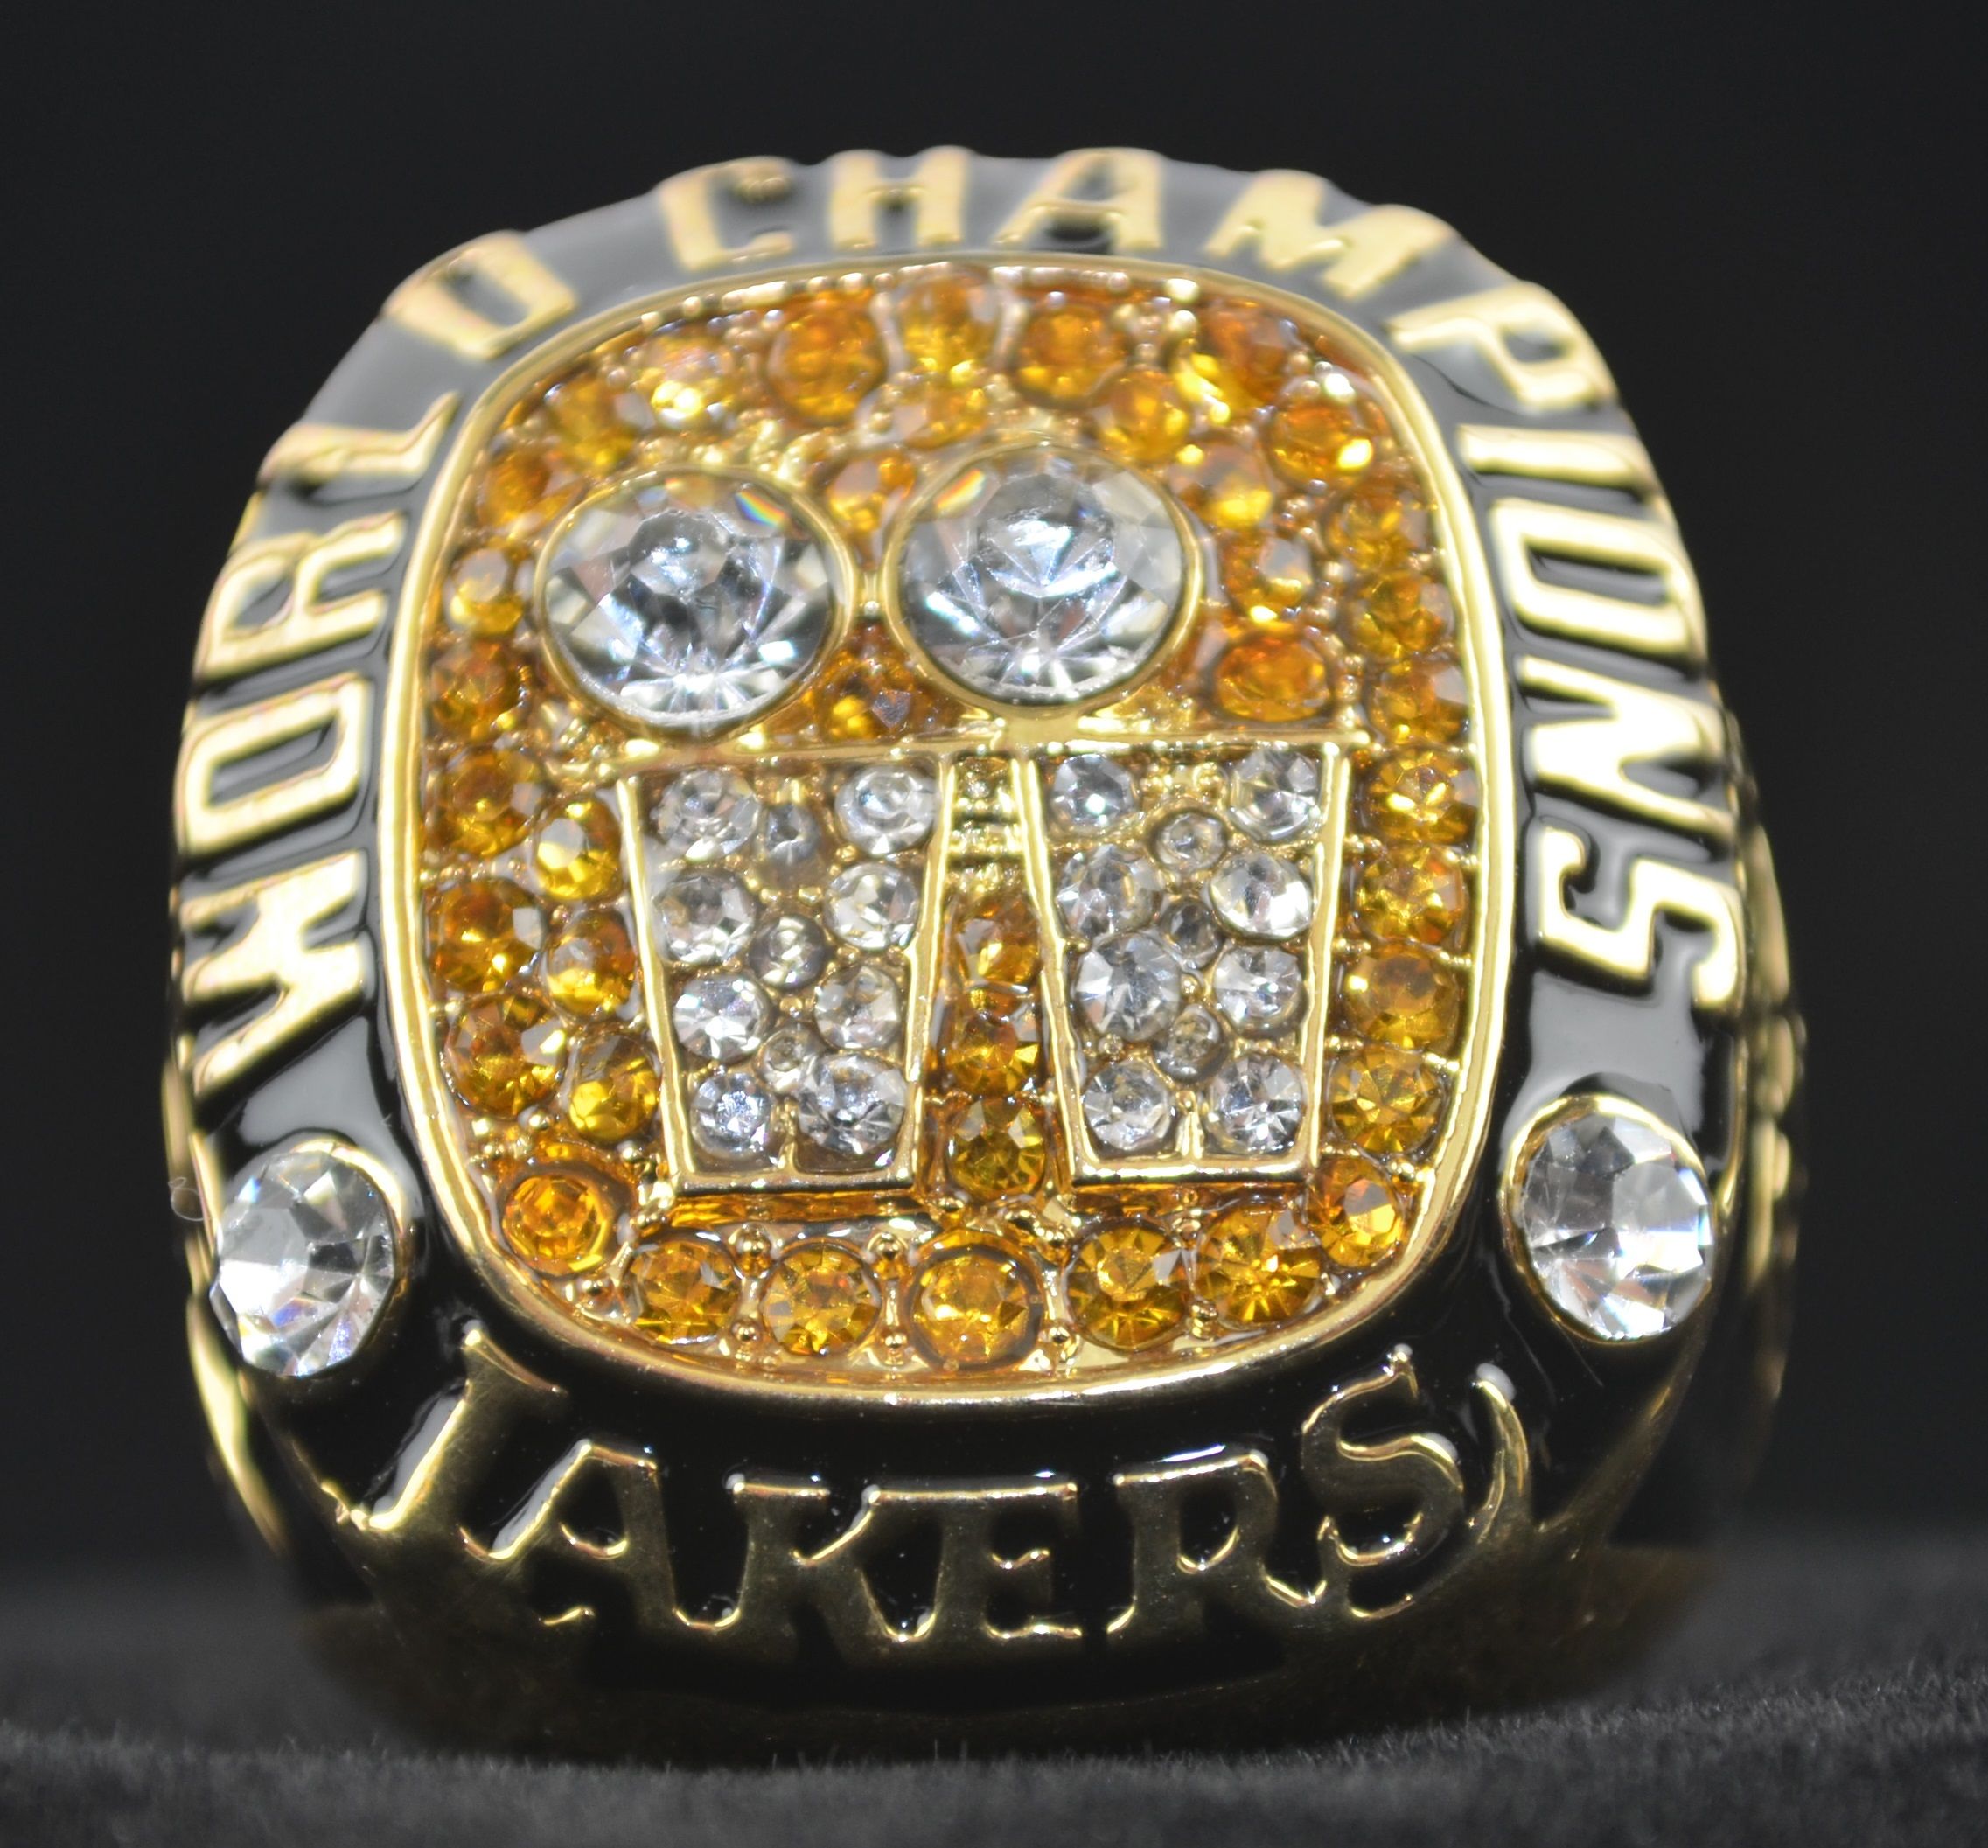 value of nba championship ring